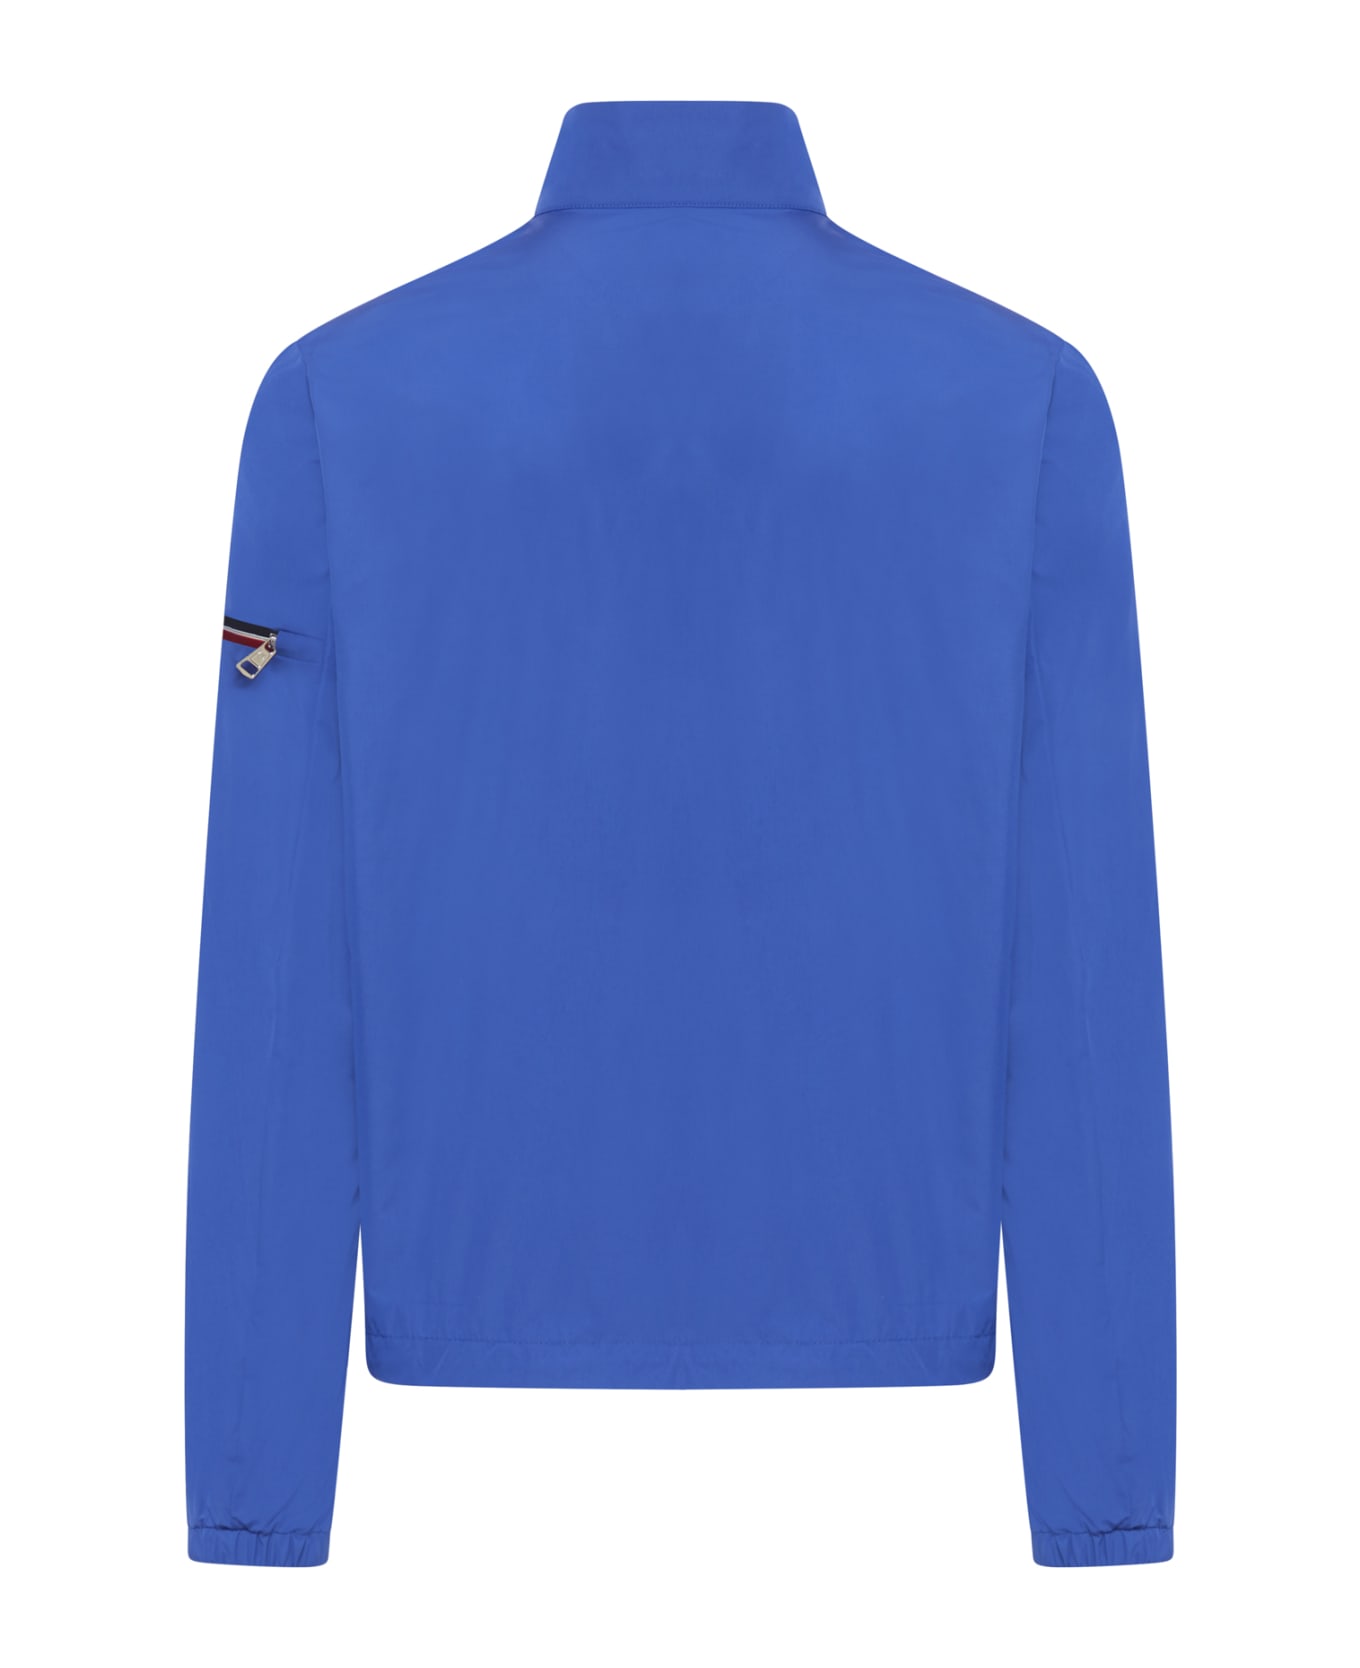 Moncler Ruinette Jacket - L Medium Blue